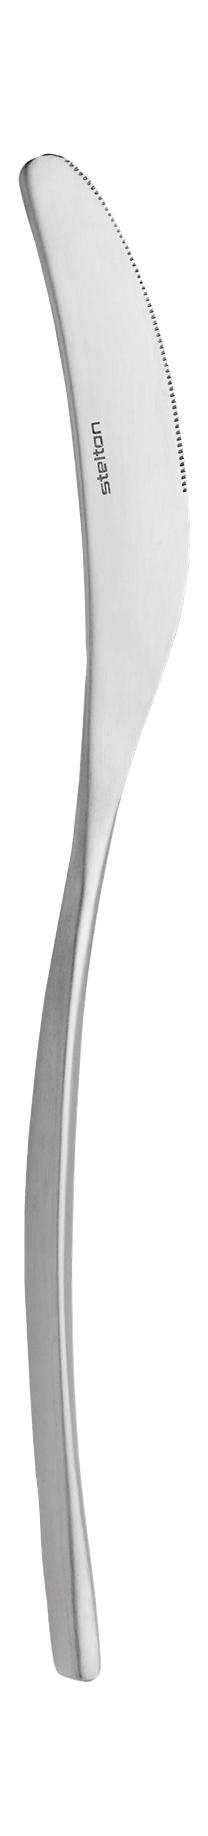 Stelton Capelano Table Knife